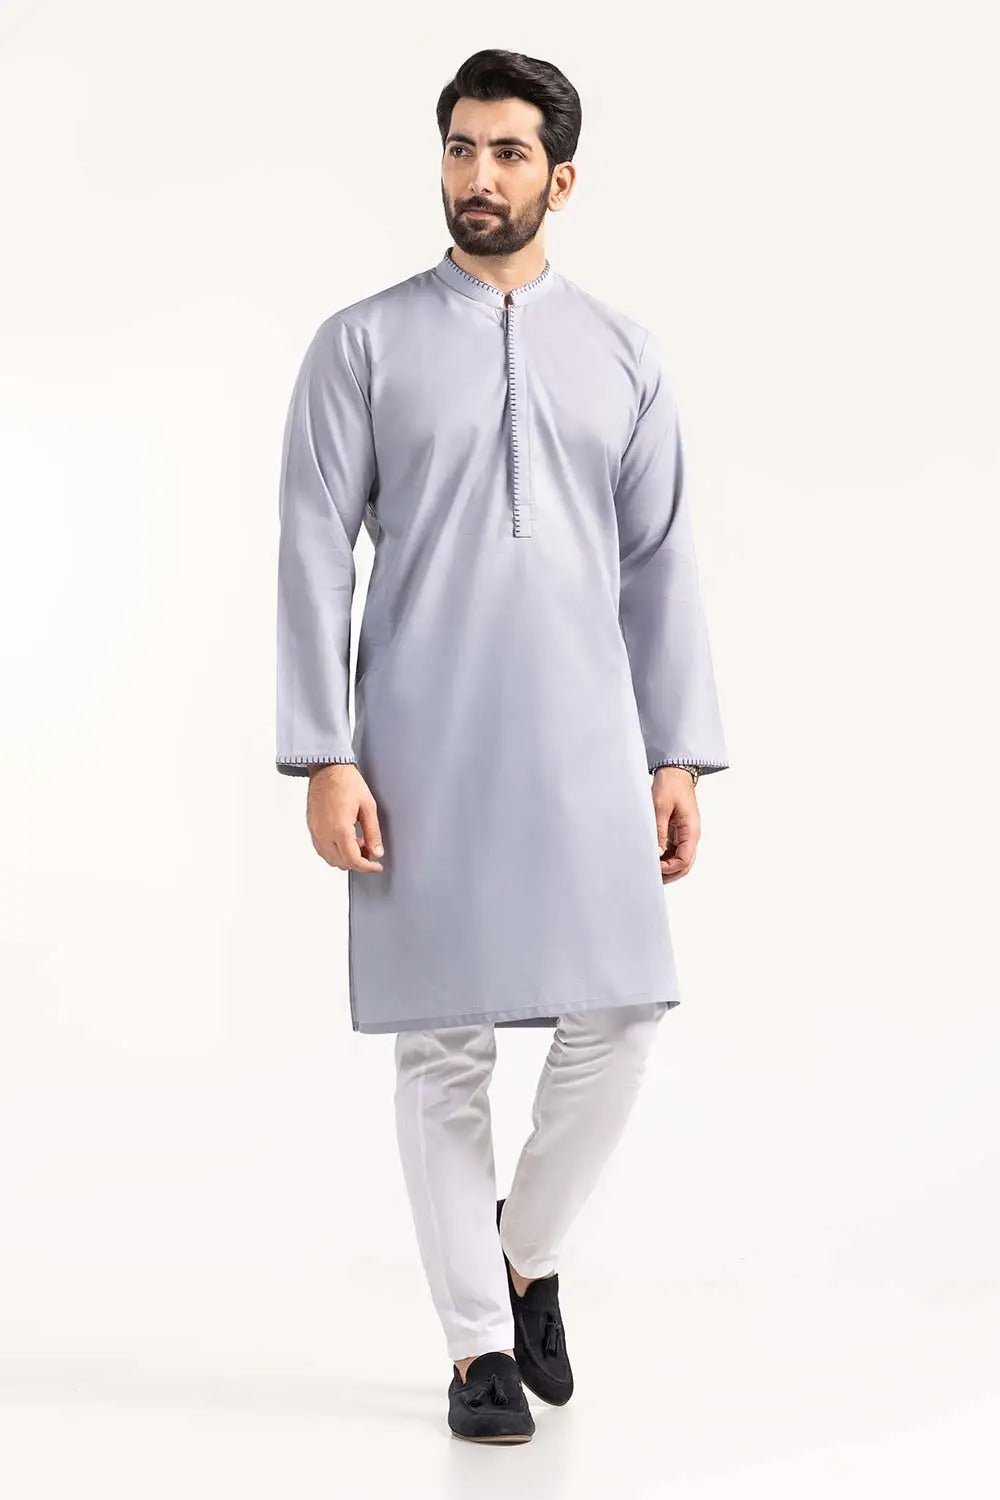 Gul Ahmed Ready to Wear Grey Semi Fashion Kurta - KE-1459